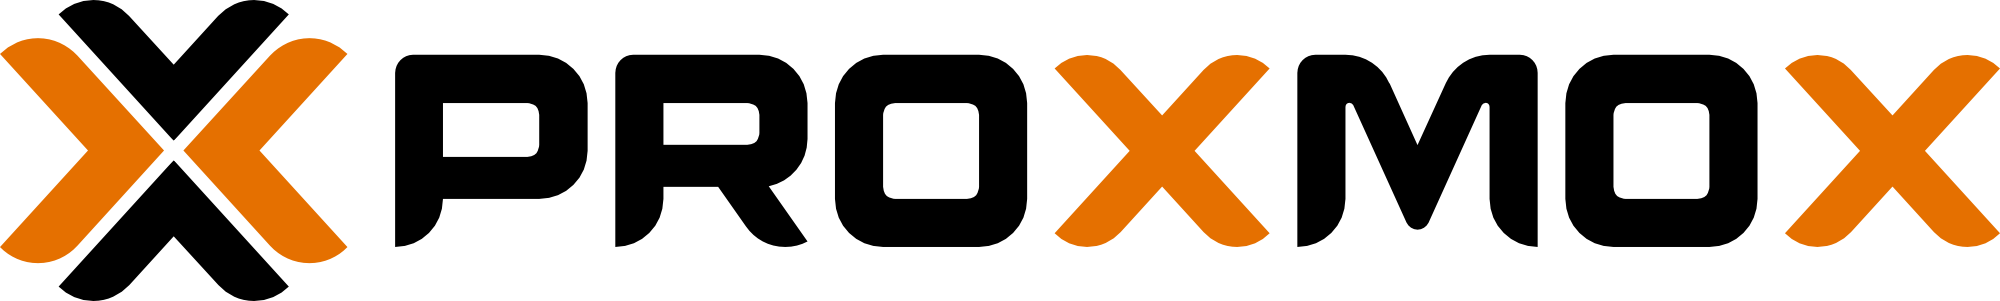 proxmox_logo_standard_hex_2000px